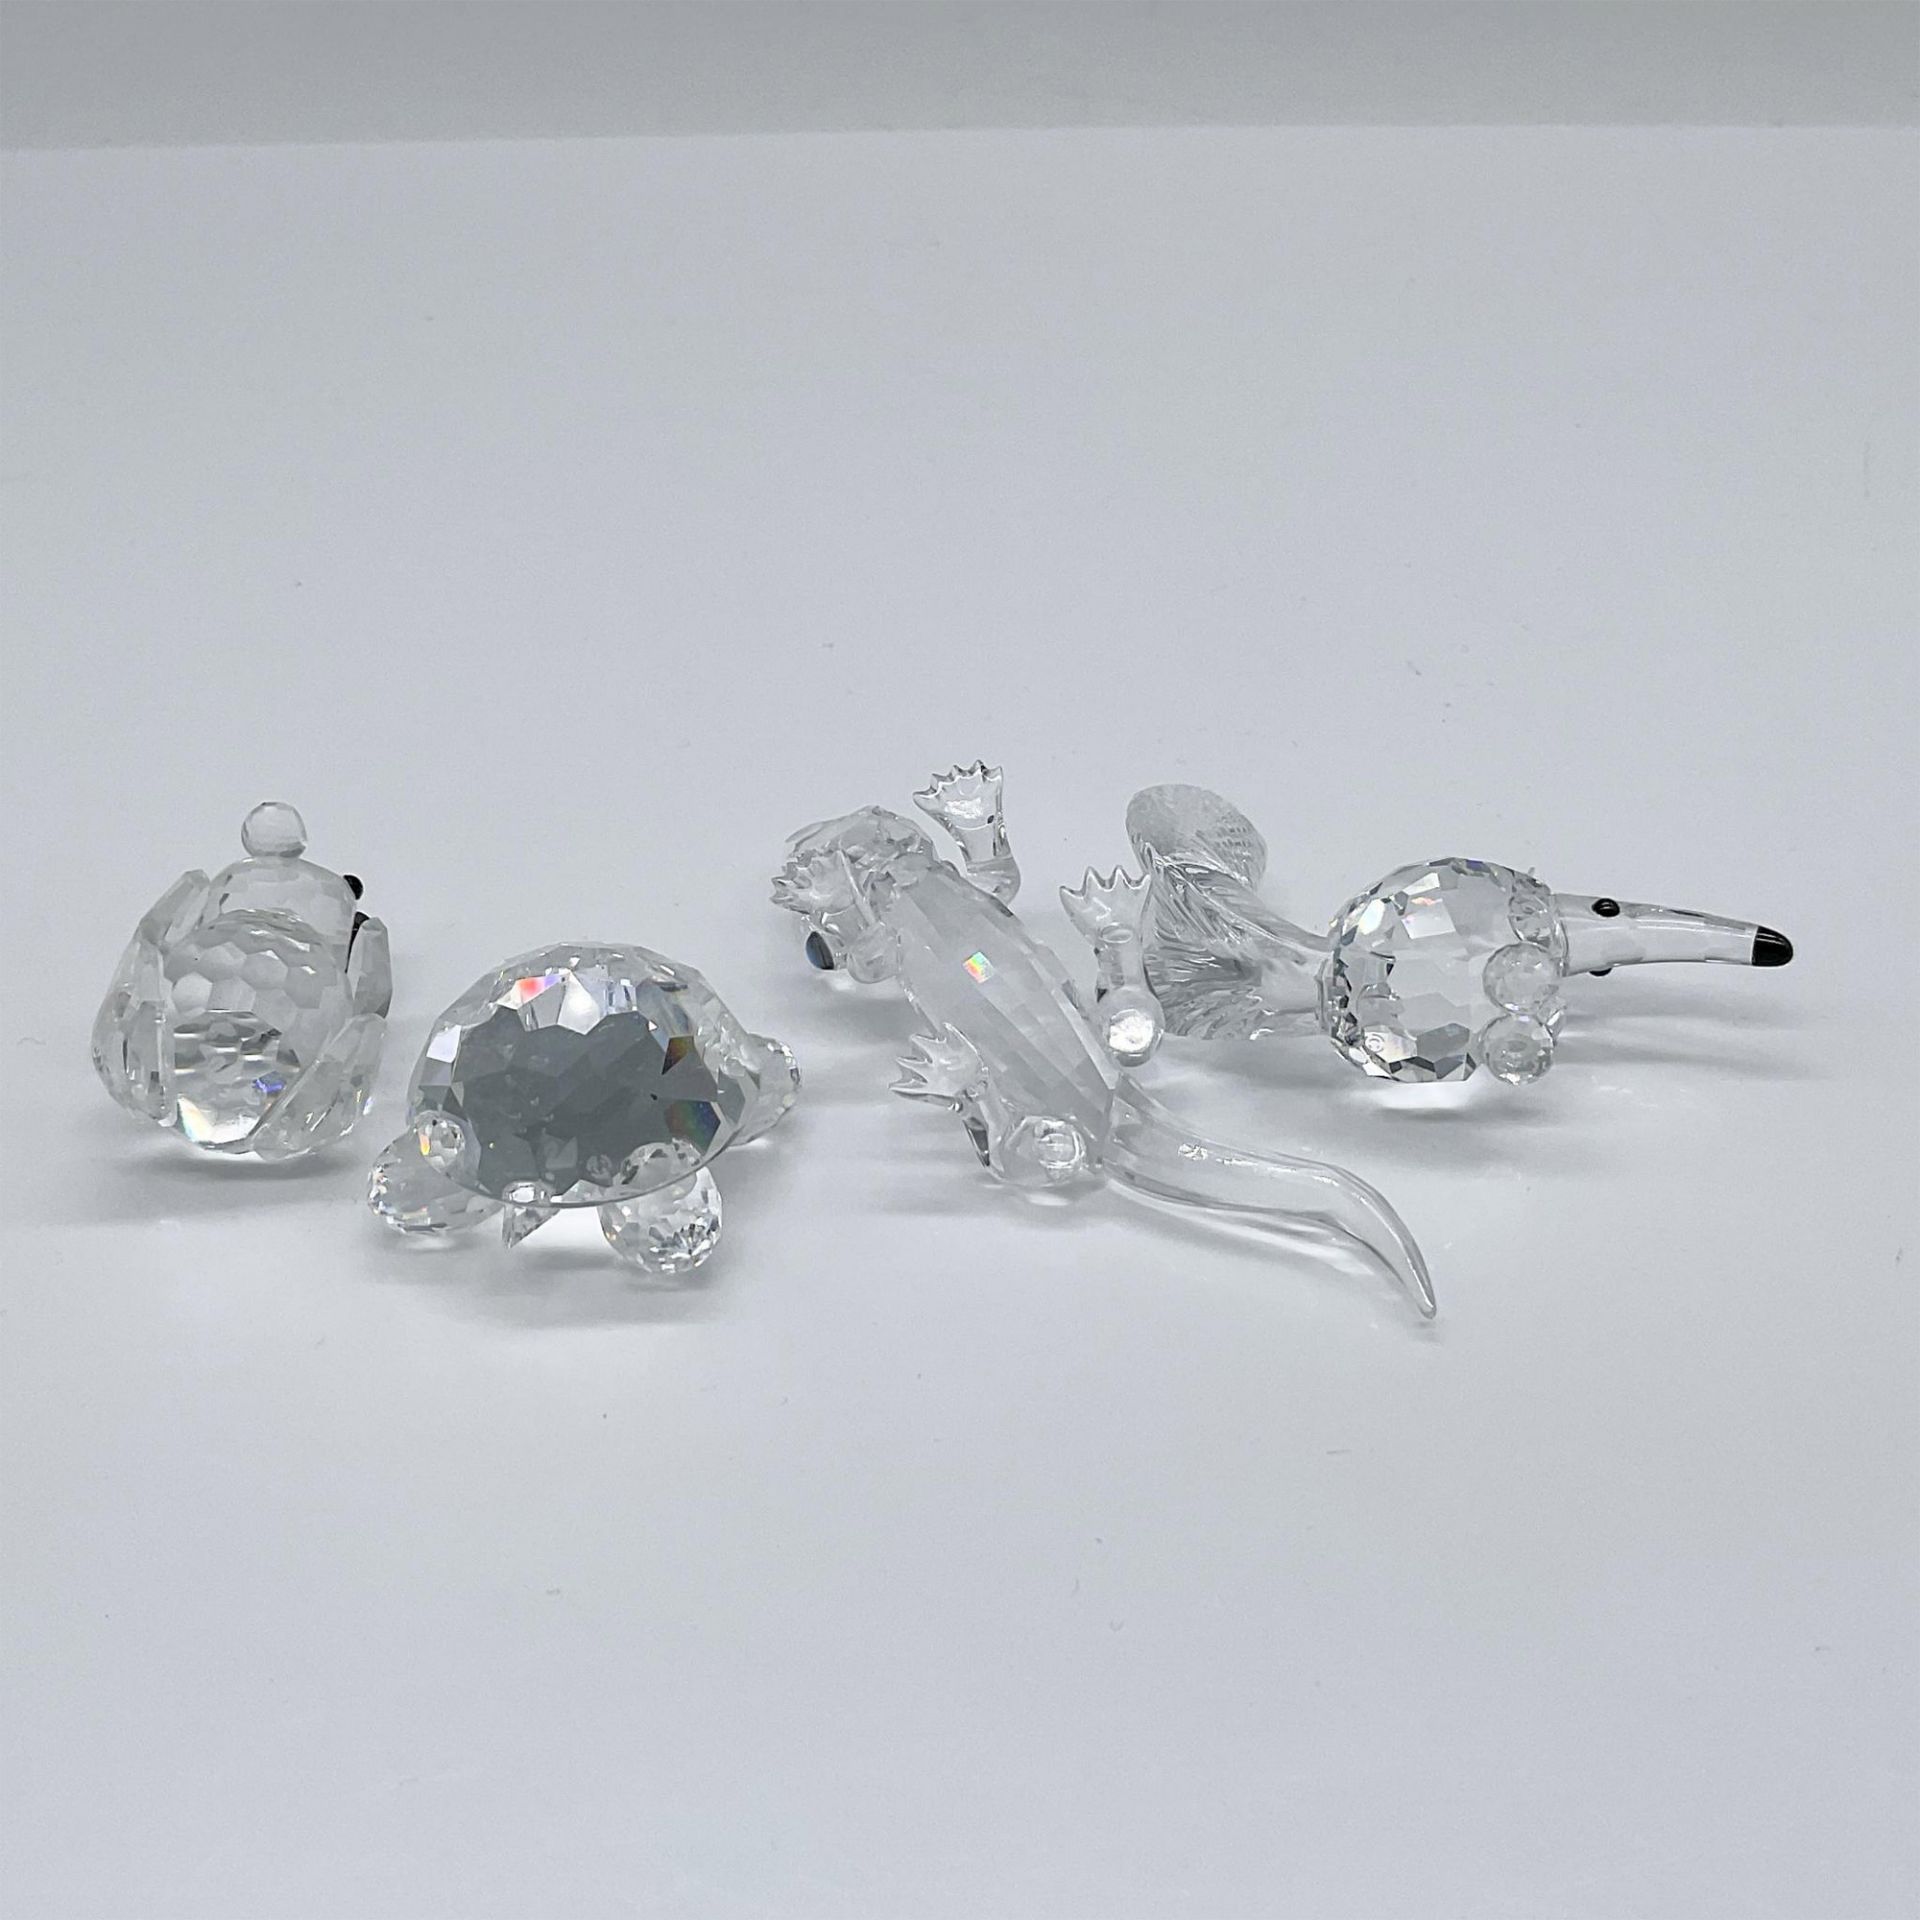 4pc Swarovski Crystal Endangered Species Figurines - Image 3 of 3